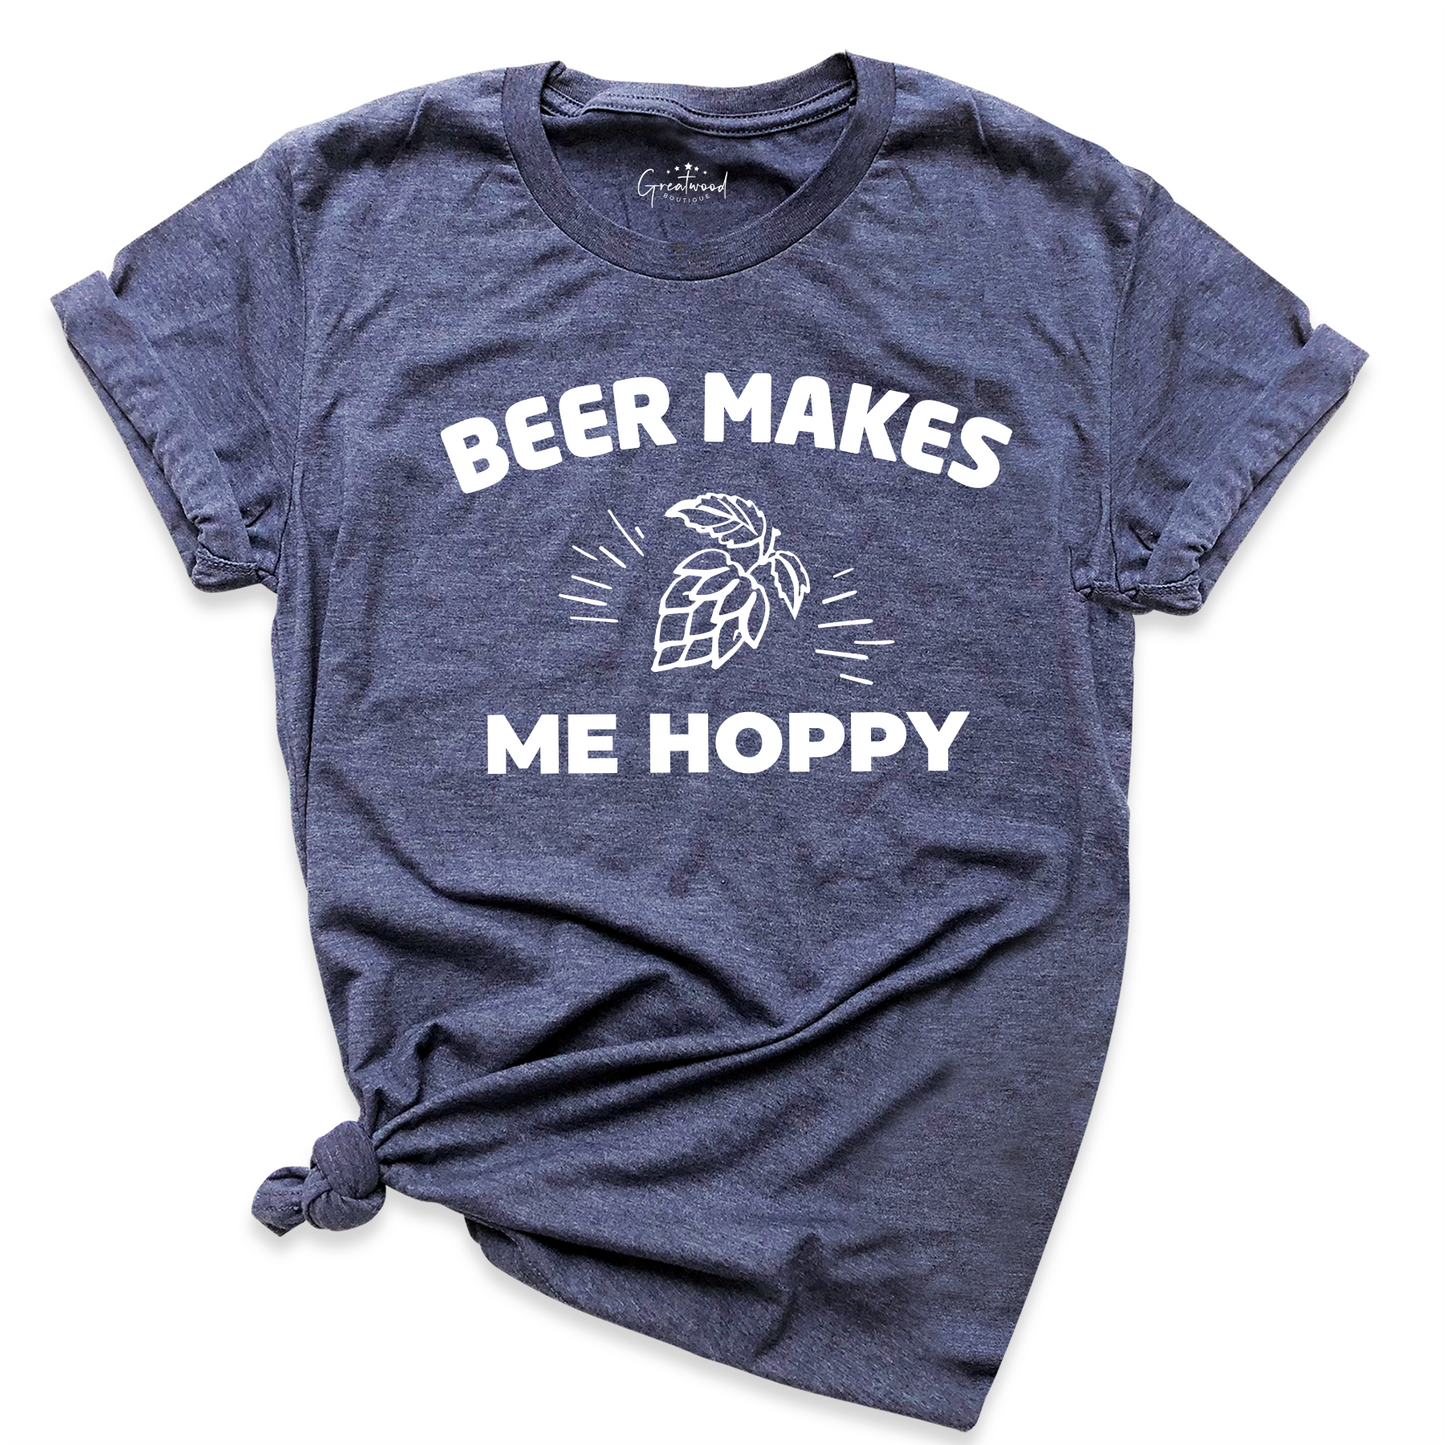 Beer Makes Me Hoppy Shirt